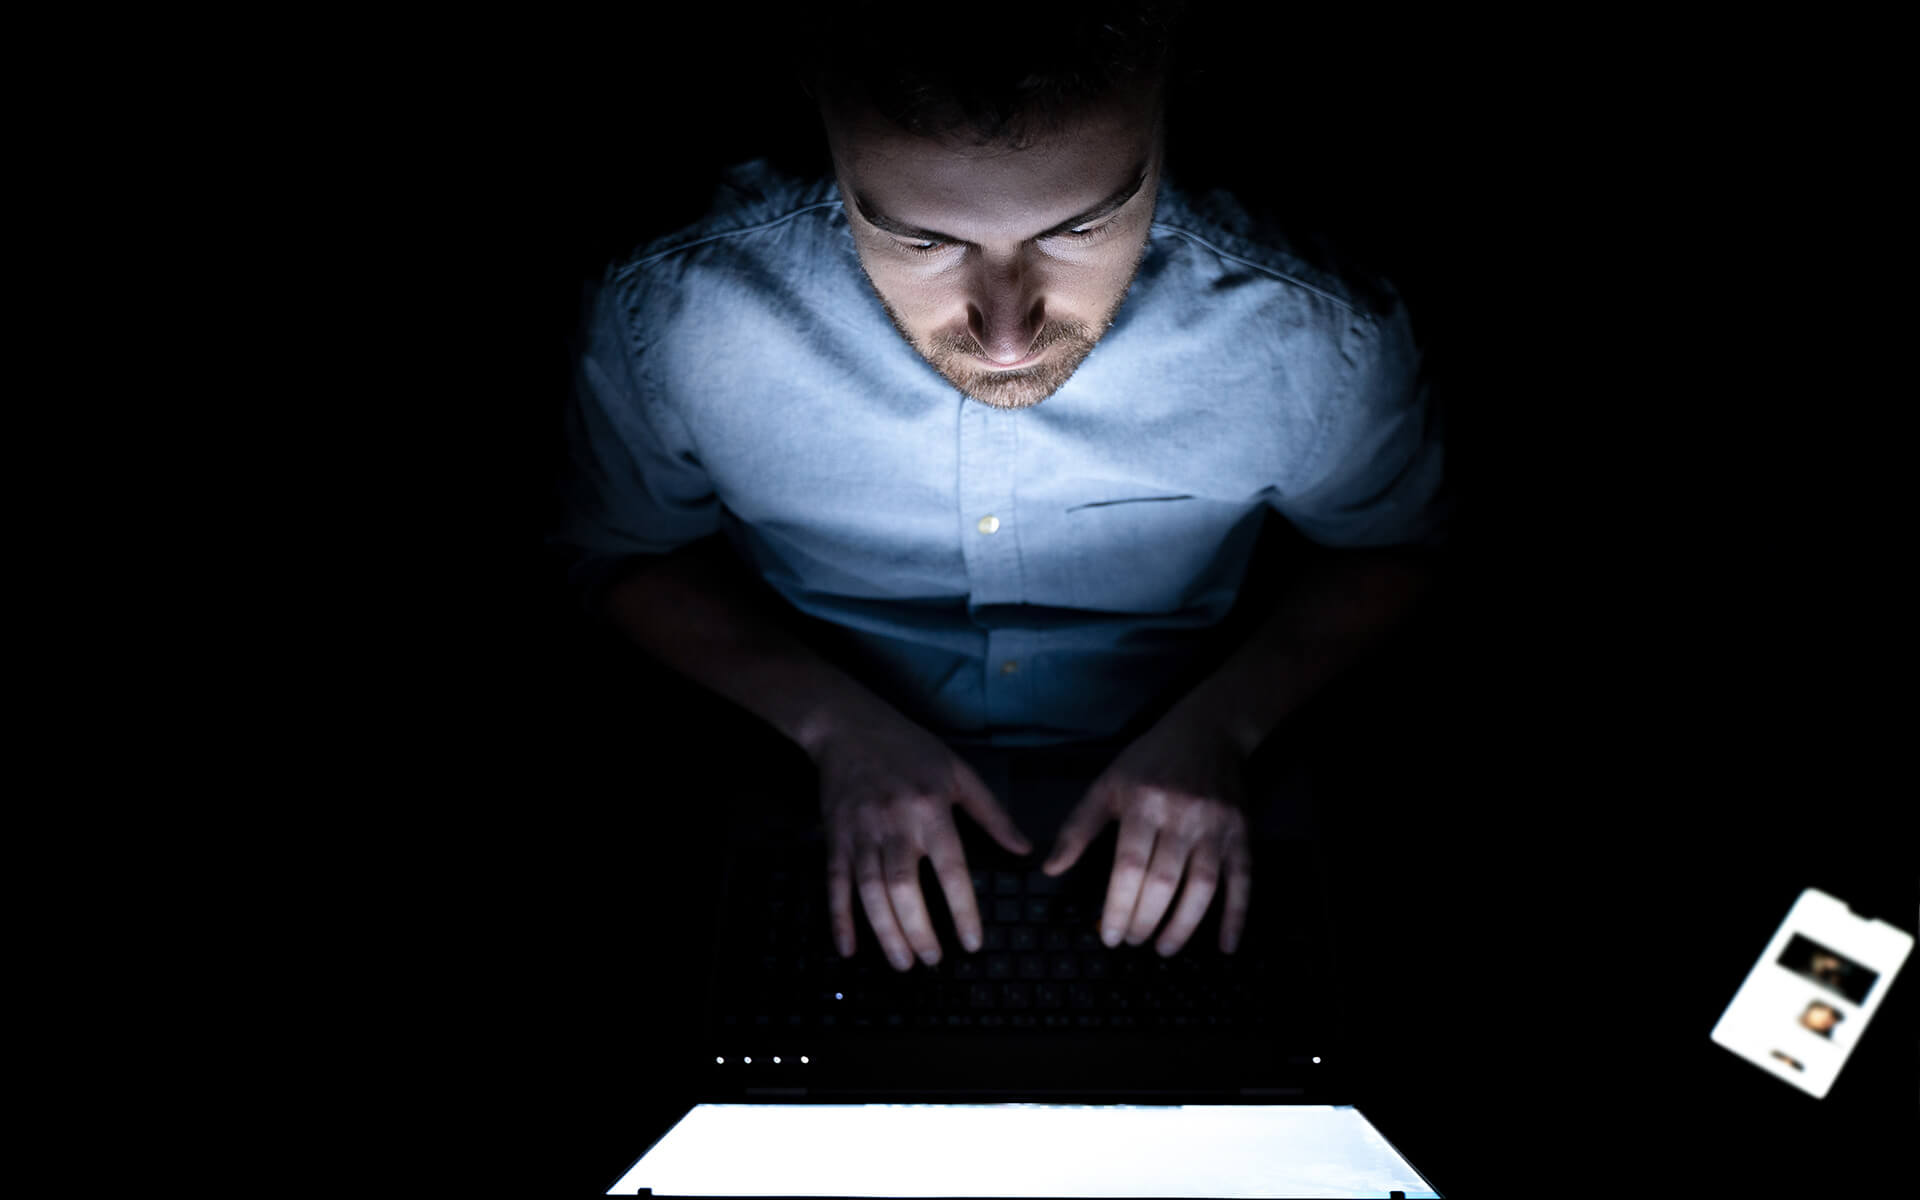 man using computer in dark room - digital addiction at work